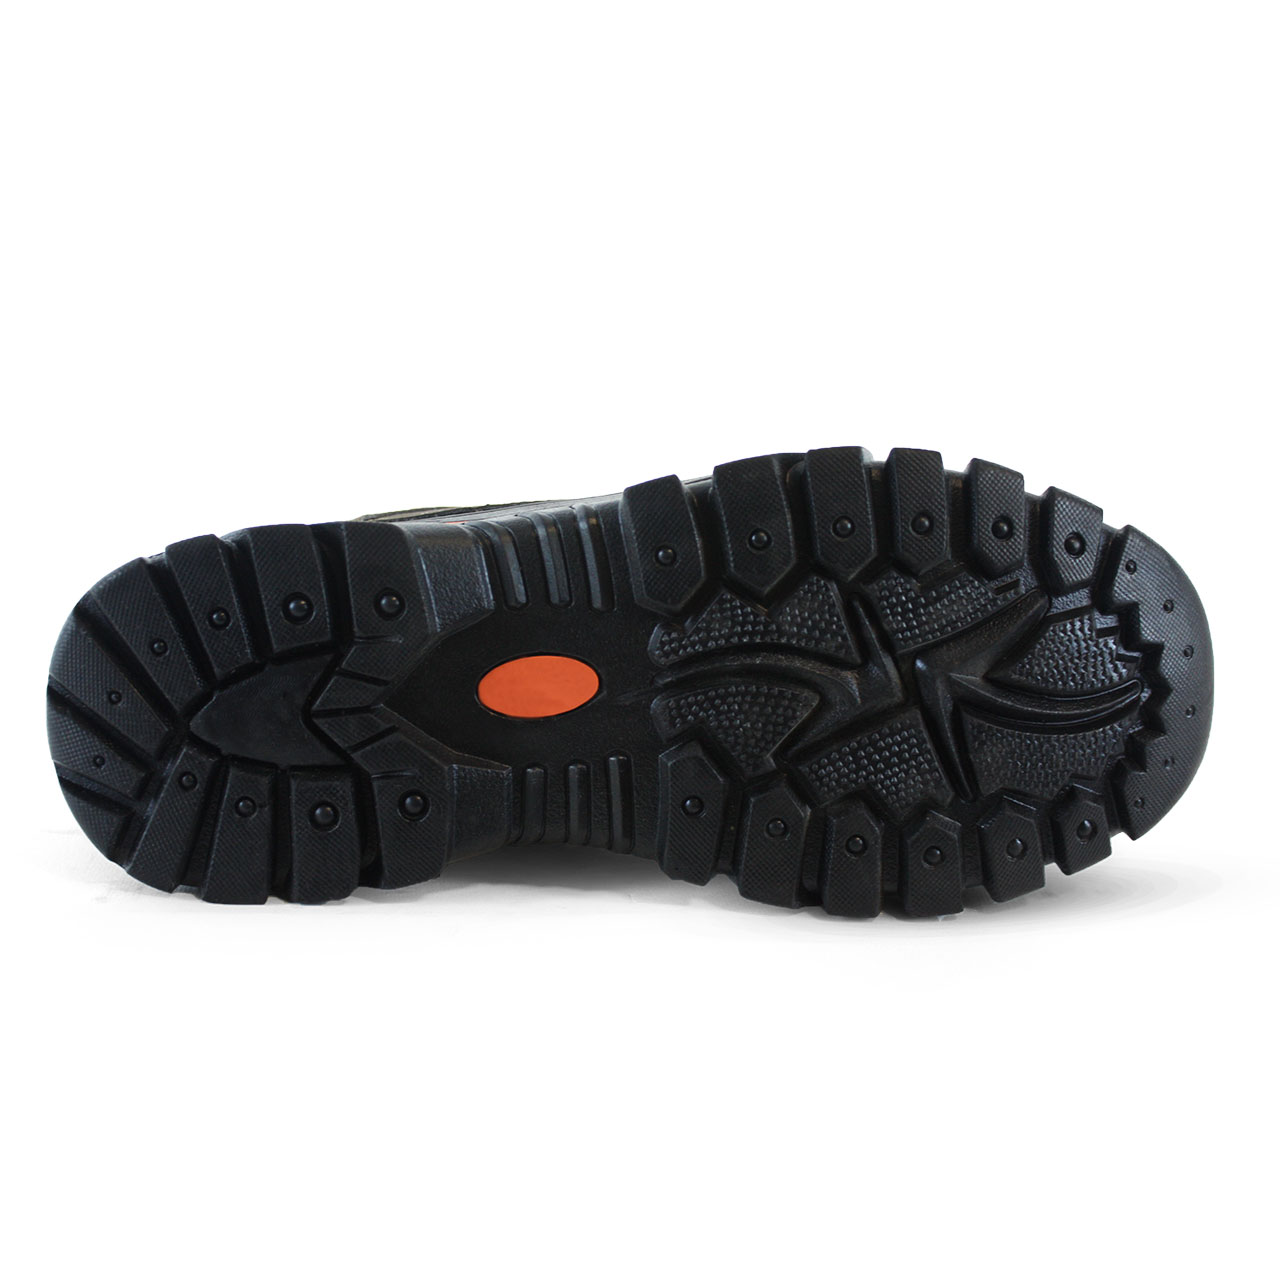 Men's Athletic Comfort Leatherette Shoes Brown/Ash/Green